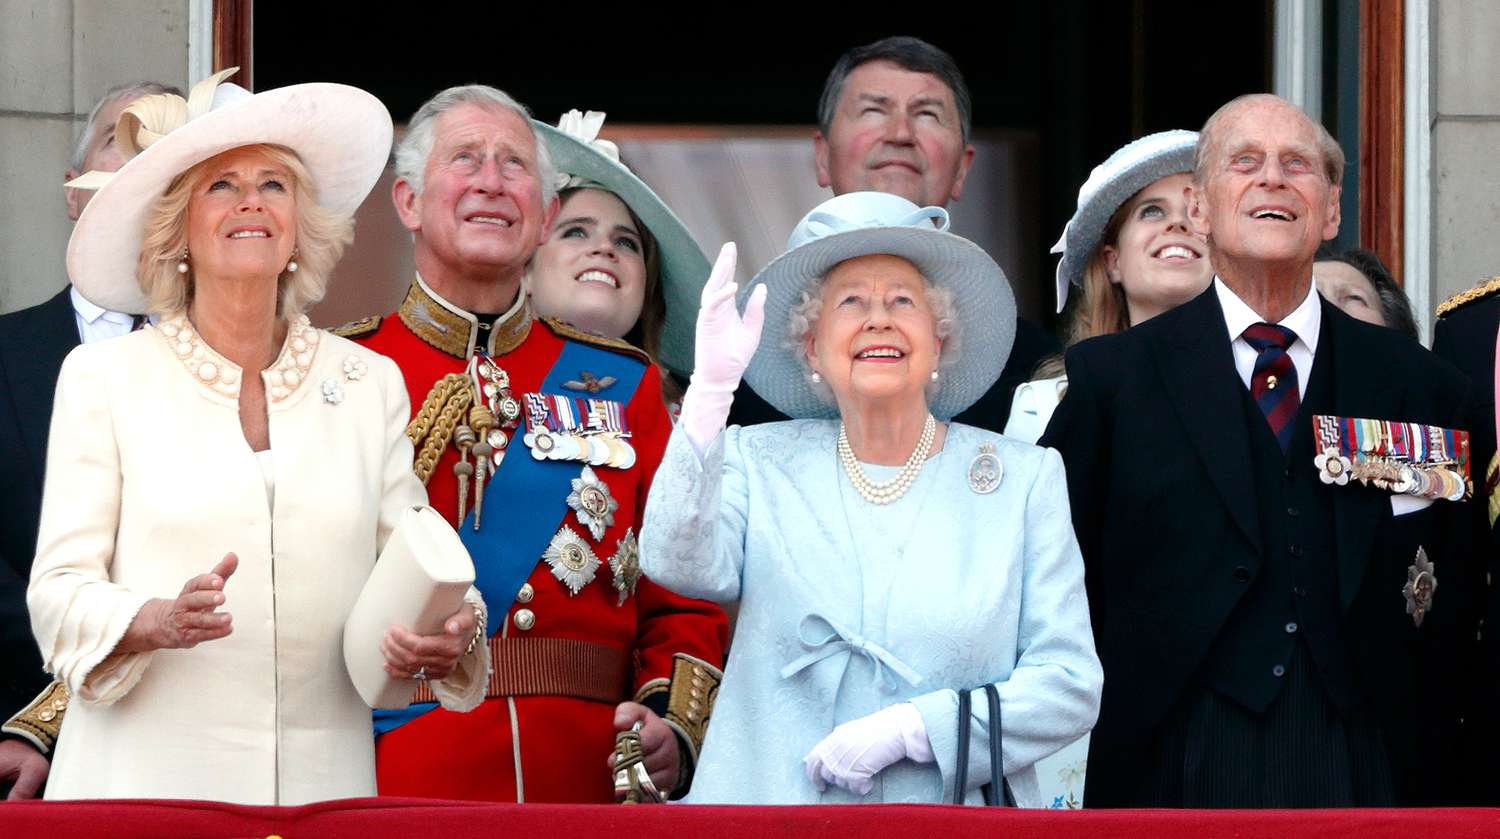 Camilla, Duchess of Cornwall, Prince Charles, Prince of Wales, Queen Elizabeth II and Prince Philip, Duke of Edinburgh